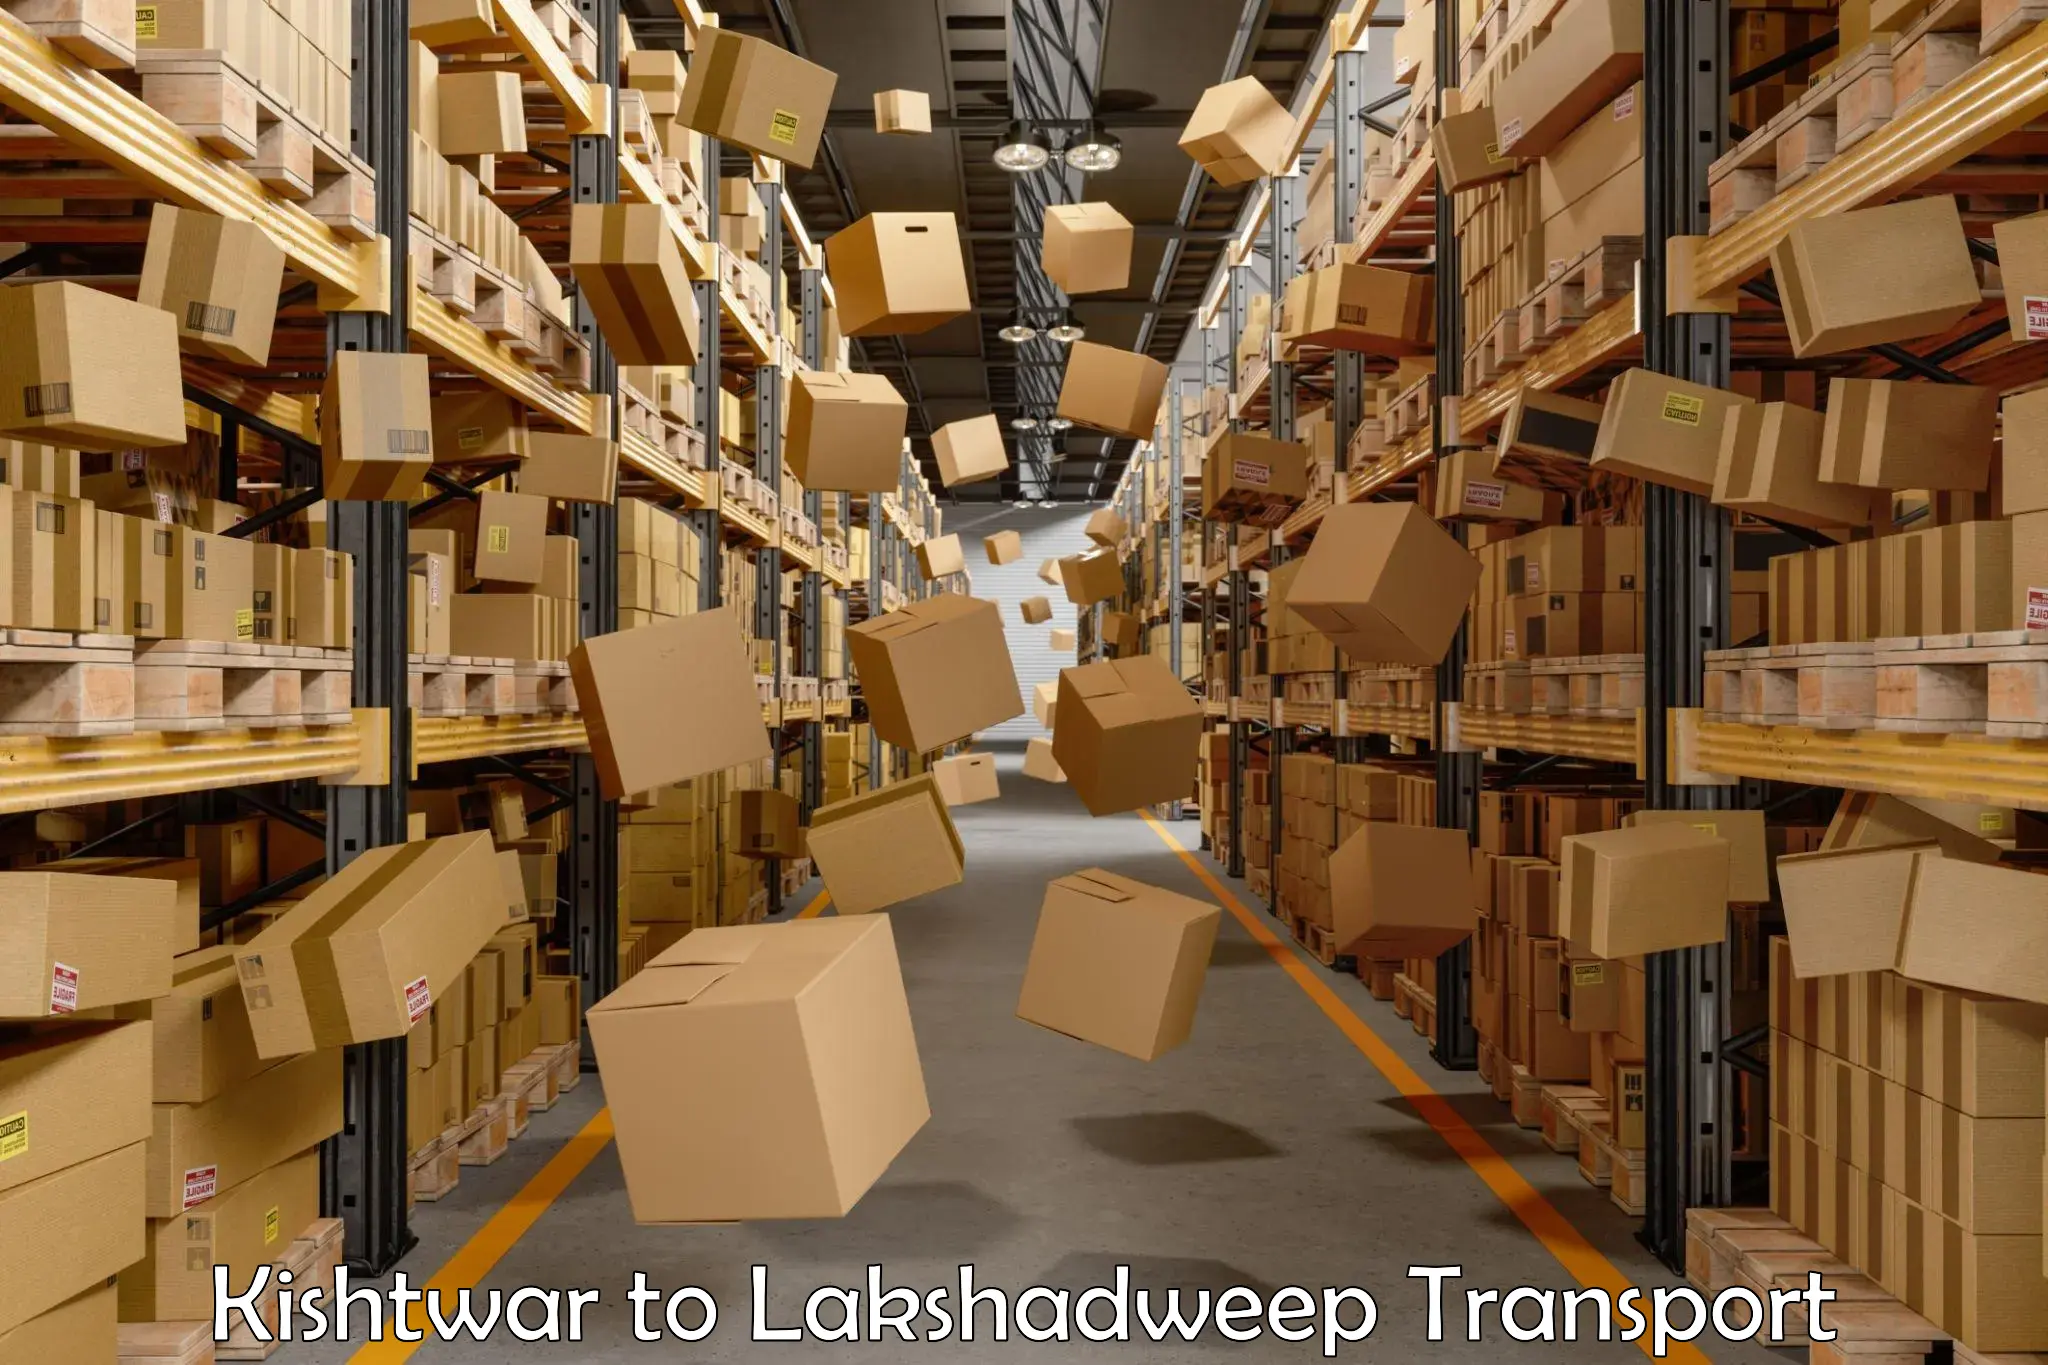 Online transport service Kishtwar to Lakshadweep